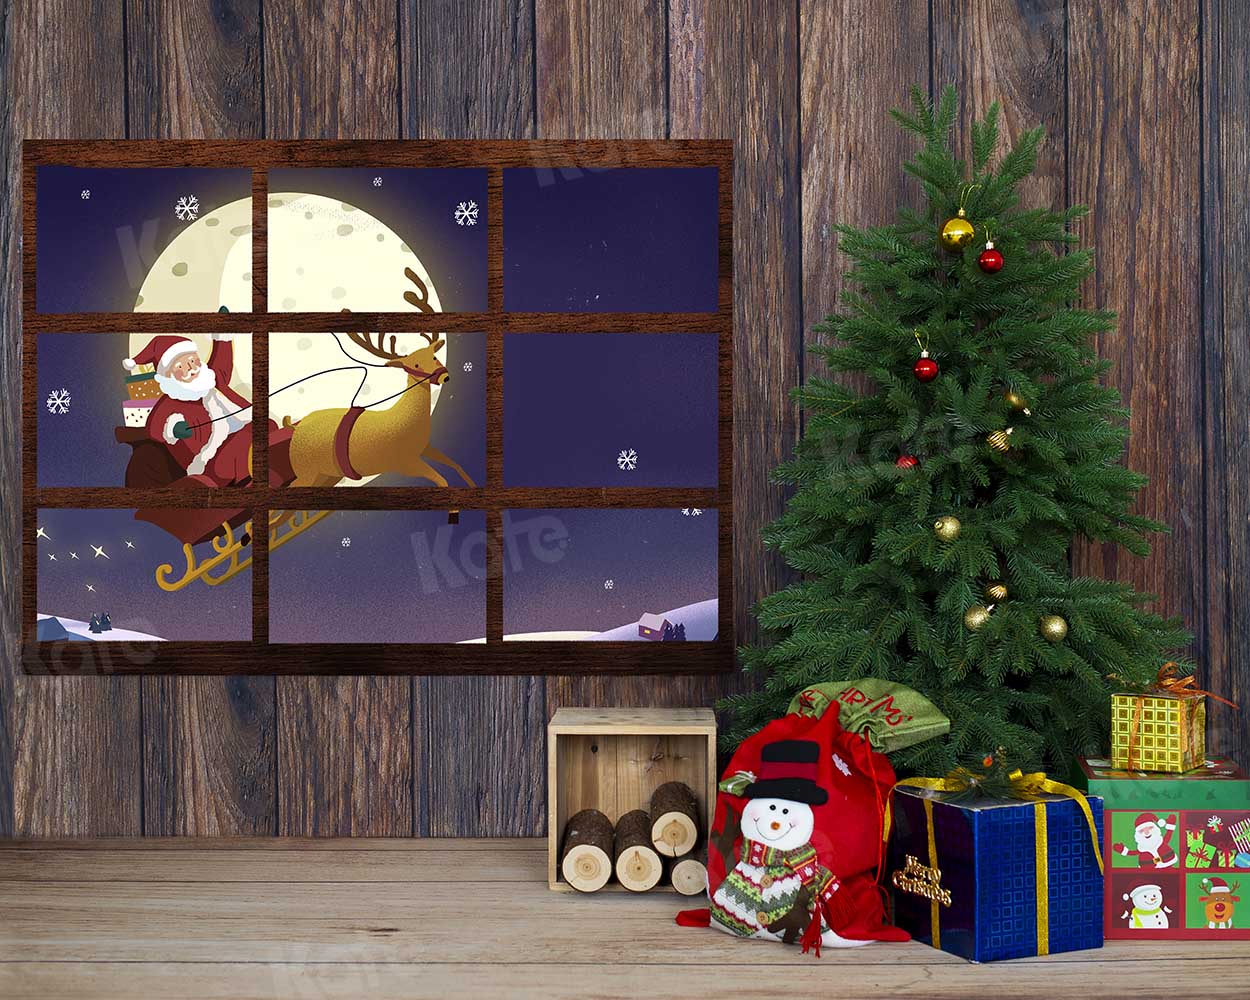 Kate Christmas Gift Wood House Window Backdrop Designed by Emetselch